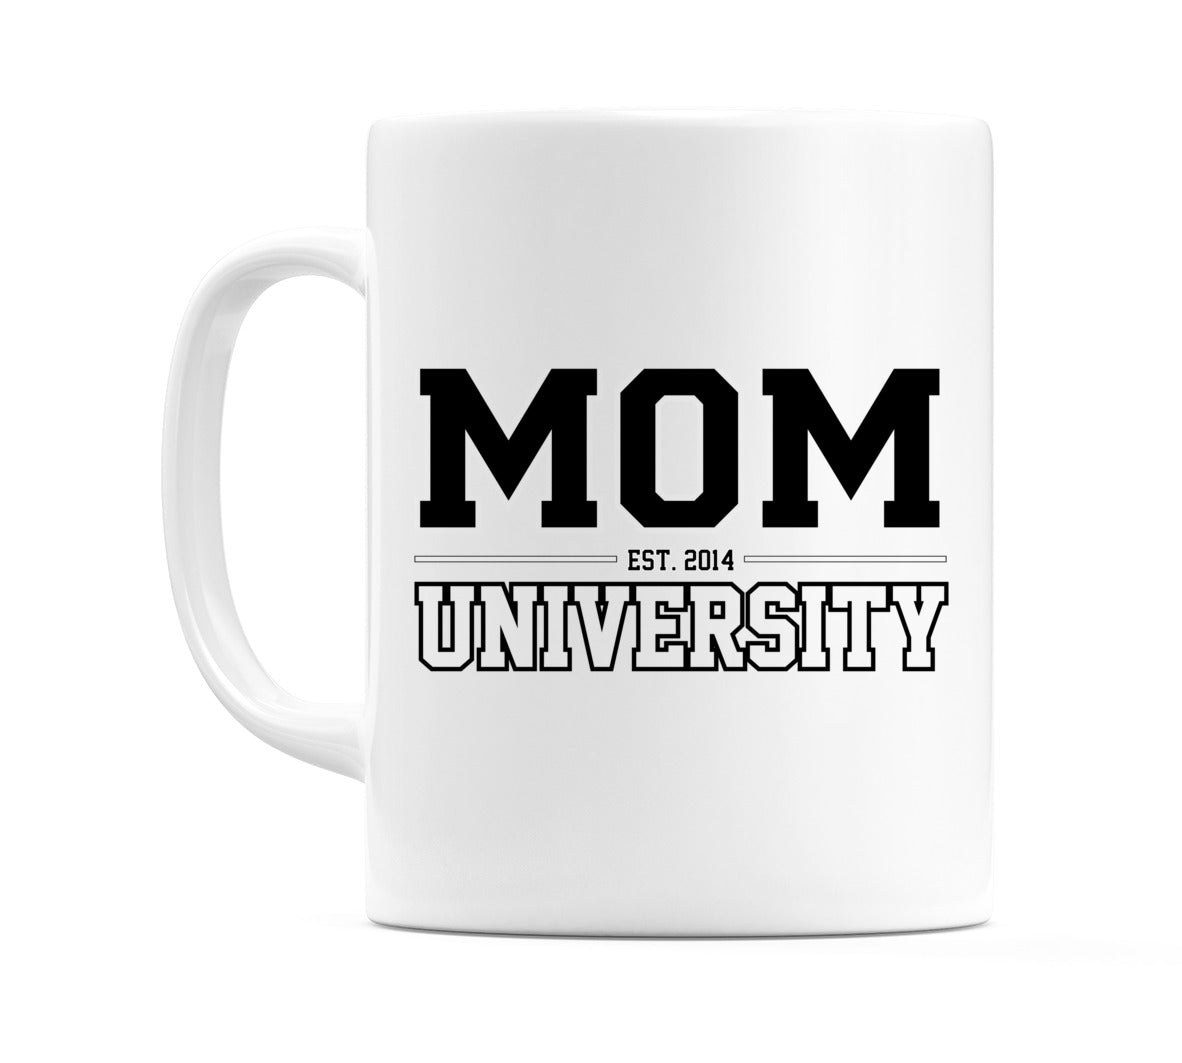 Mom Est. 2014 University Mug